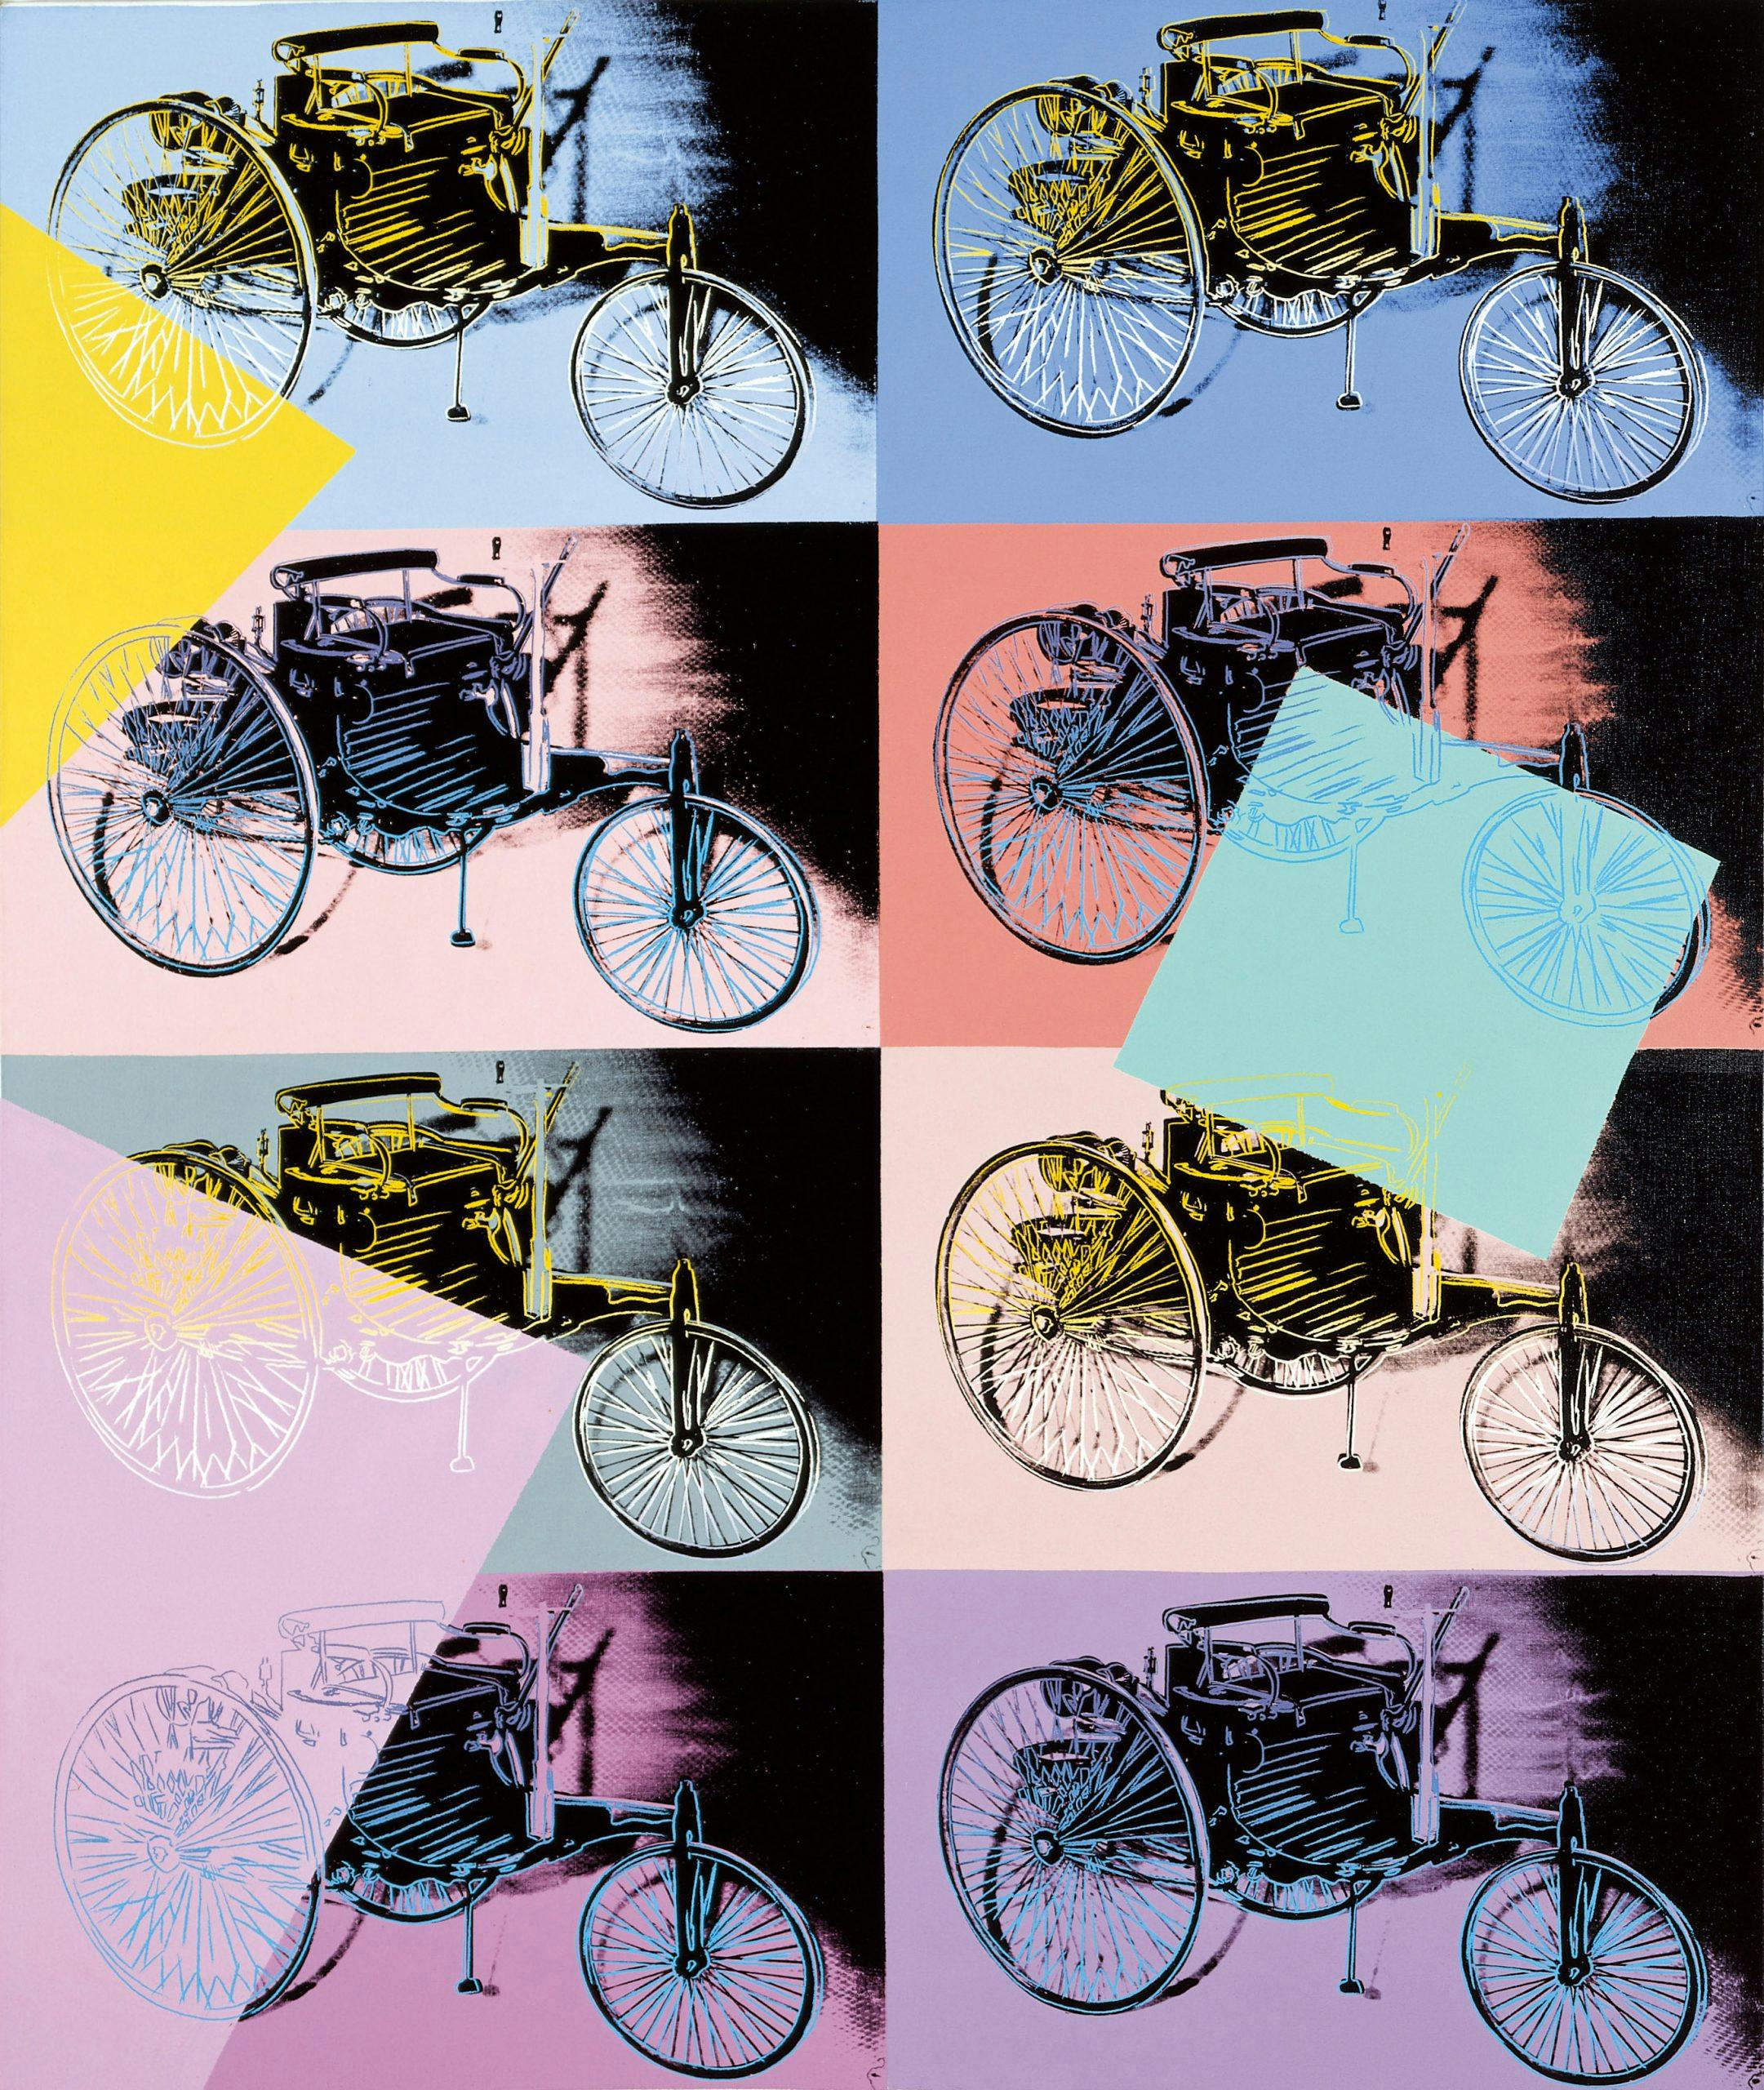 Benz Patent Motor Car (1886), 1986 Andy Warhol